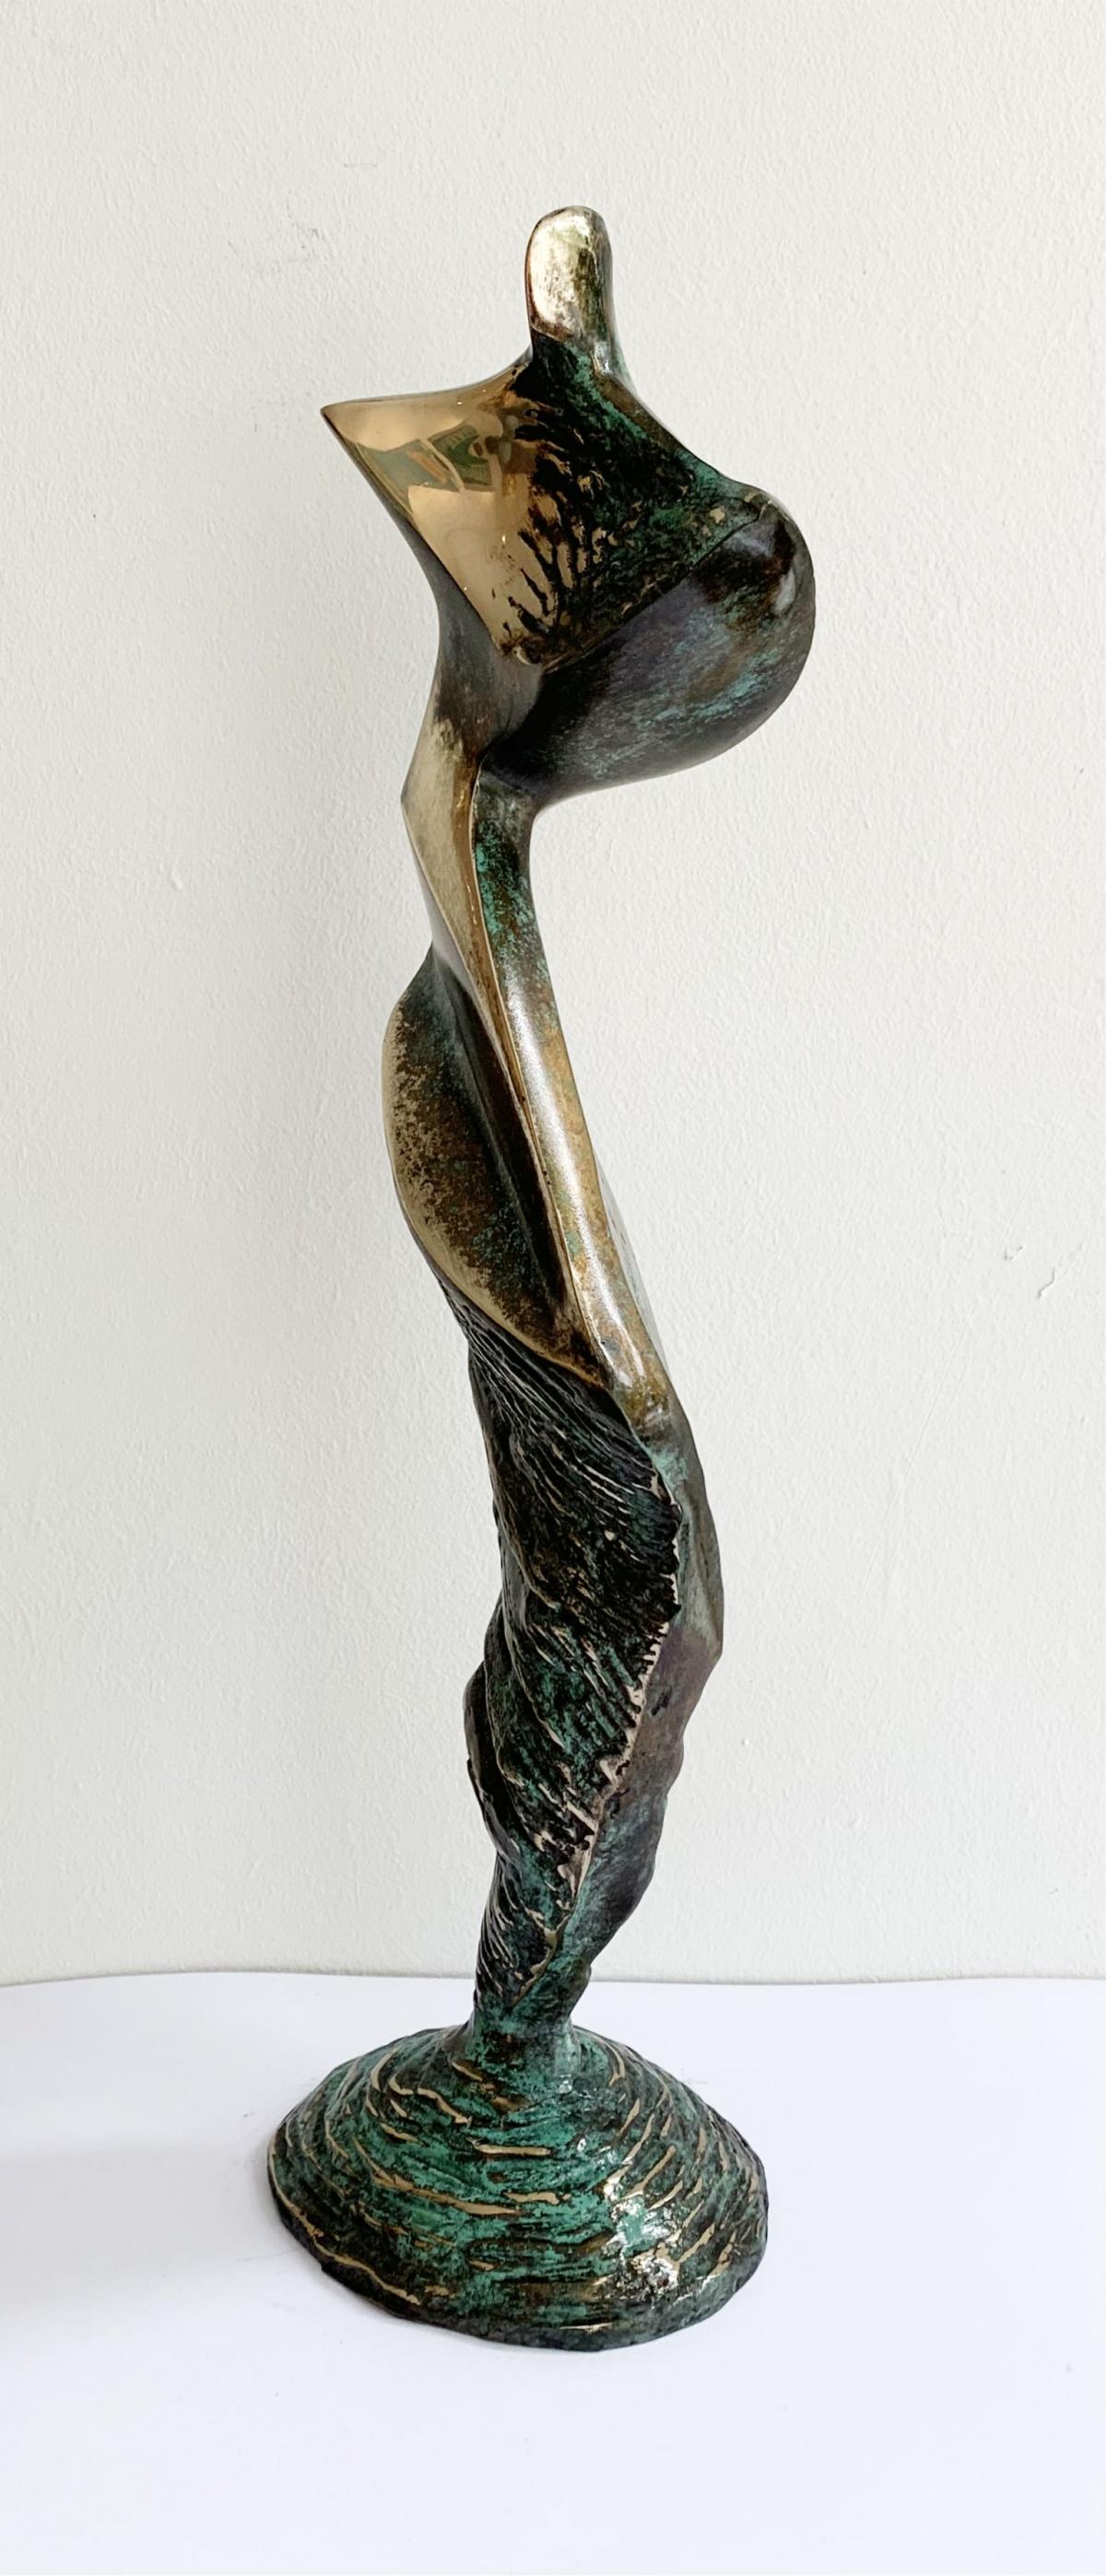 Dame II - XXI century Contemporary bronze sculpture, Abstract & figurative - Sculpture by Stanisław Wysocki